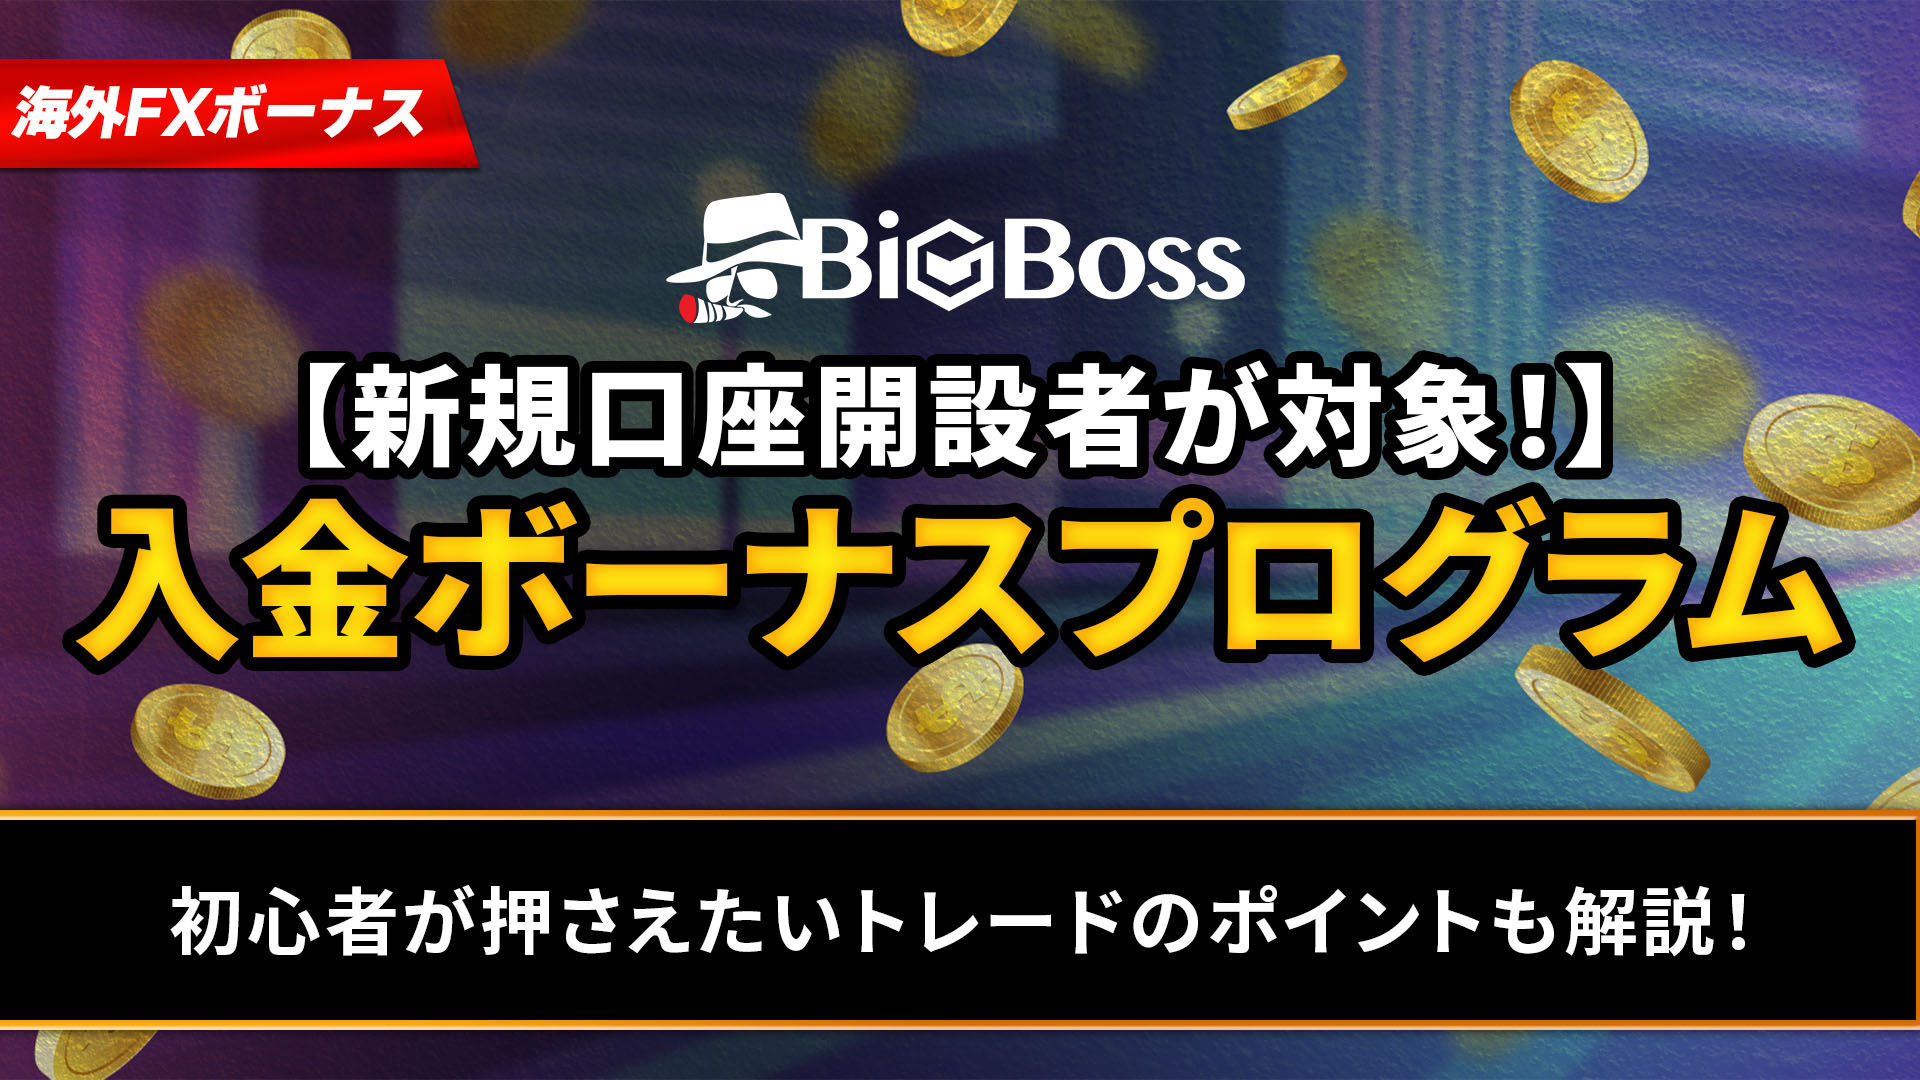 BigBoss入金ボーナスプログラム